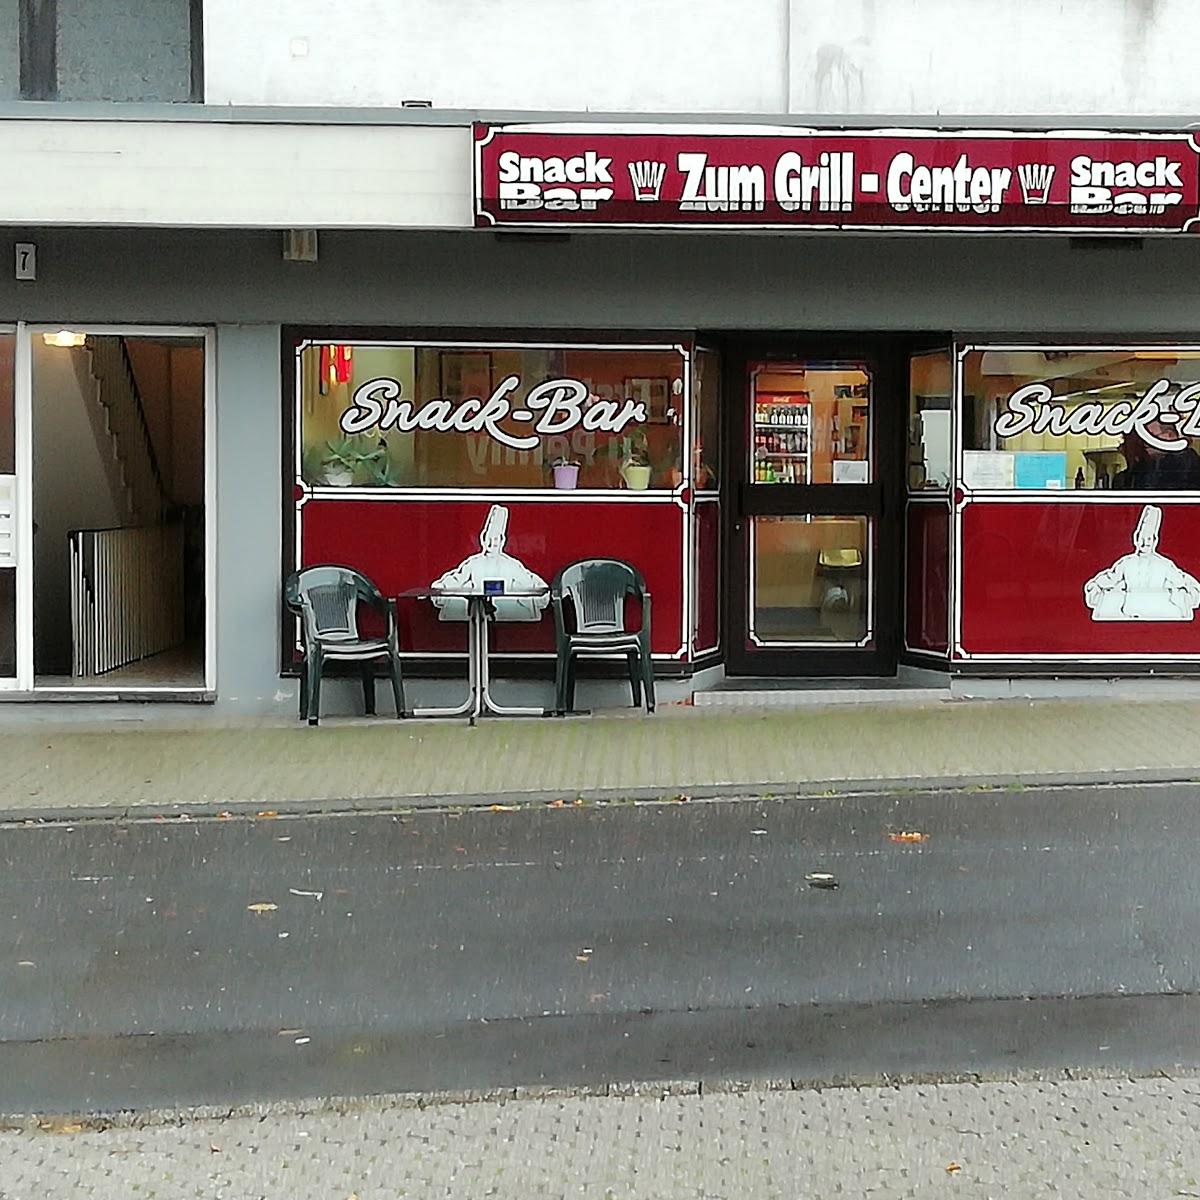 Restaurant "Snack Bar Zum Grill-Center" in Mechernich